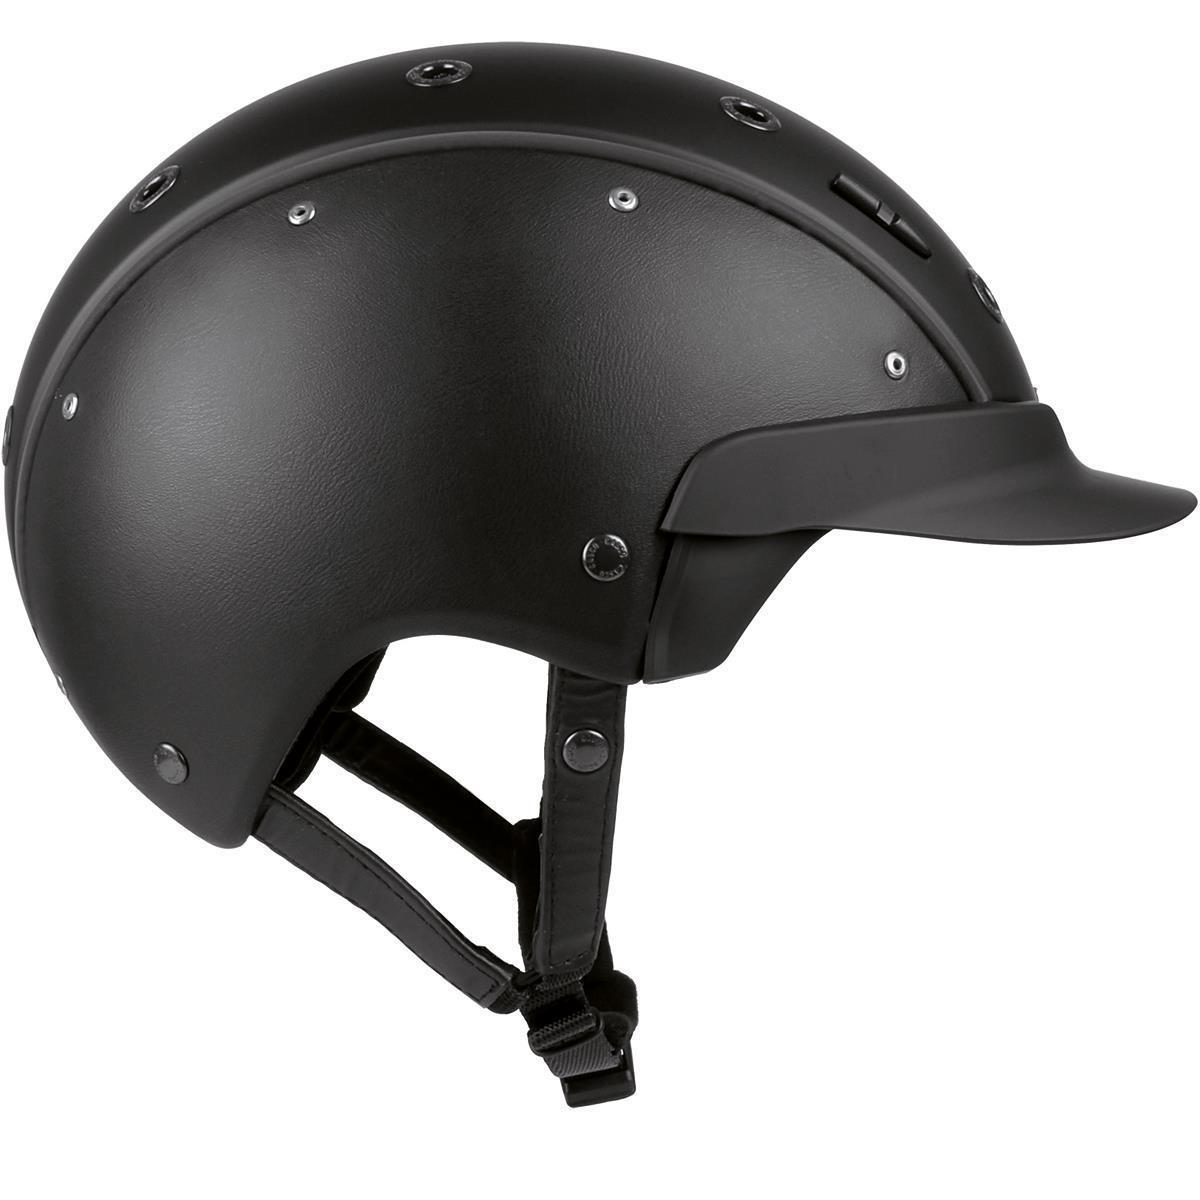 Casco MASTER 6 leather riding helmet